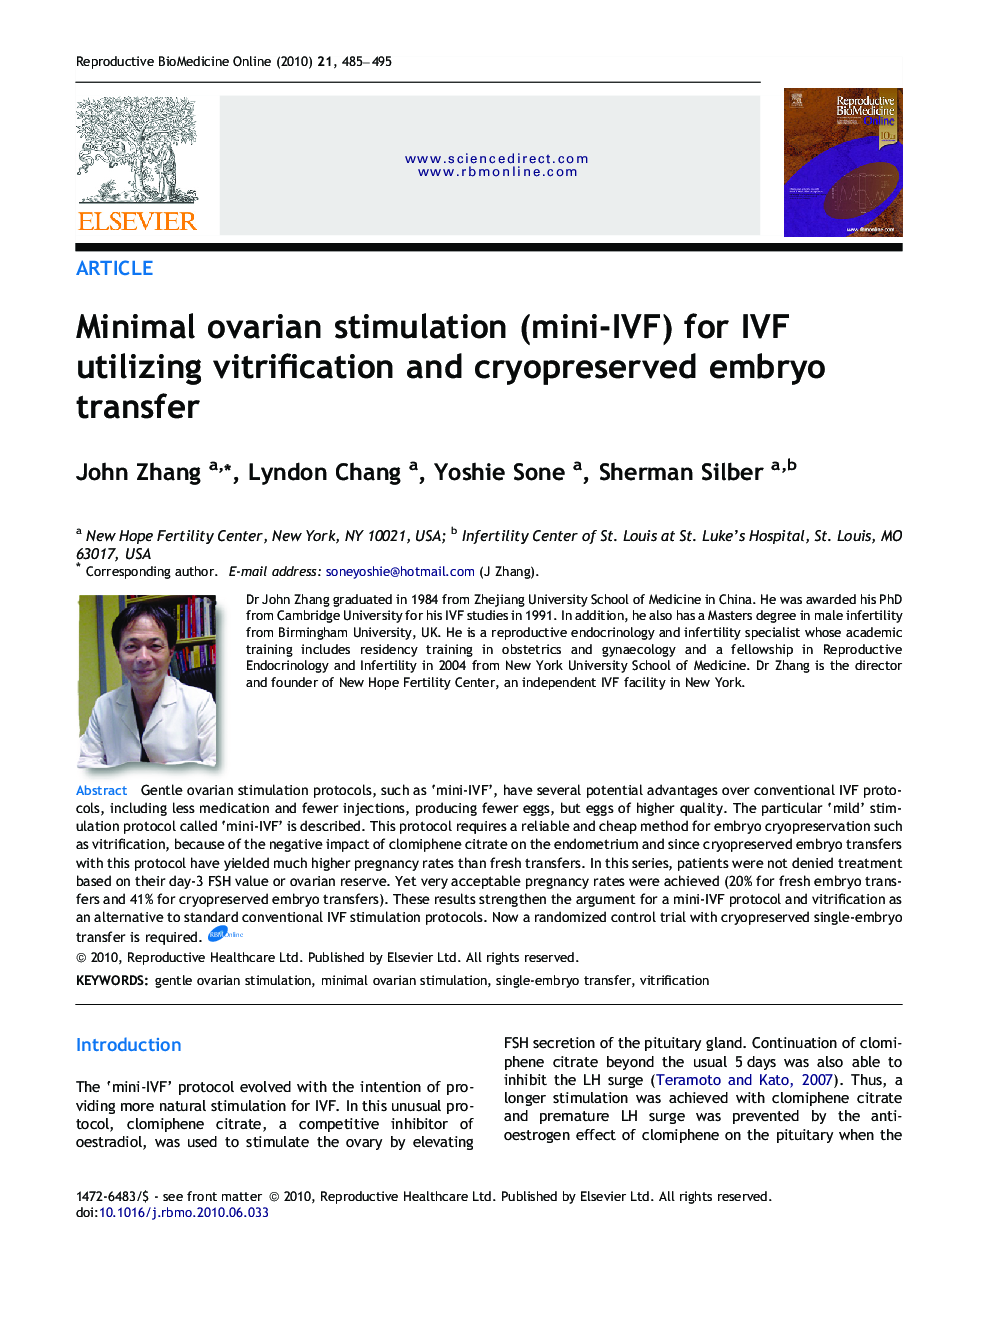 Minimal ovarian stimulation (mini-IVF) for IVF utilizing vitrification and cryopreserved embryo transfer 